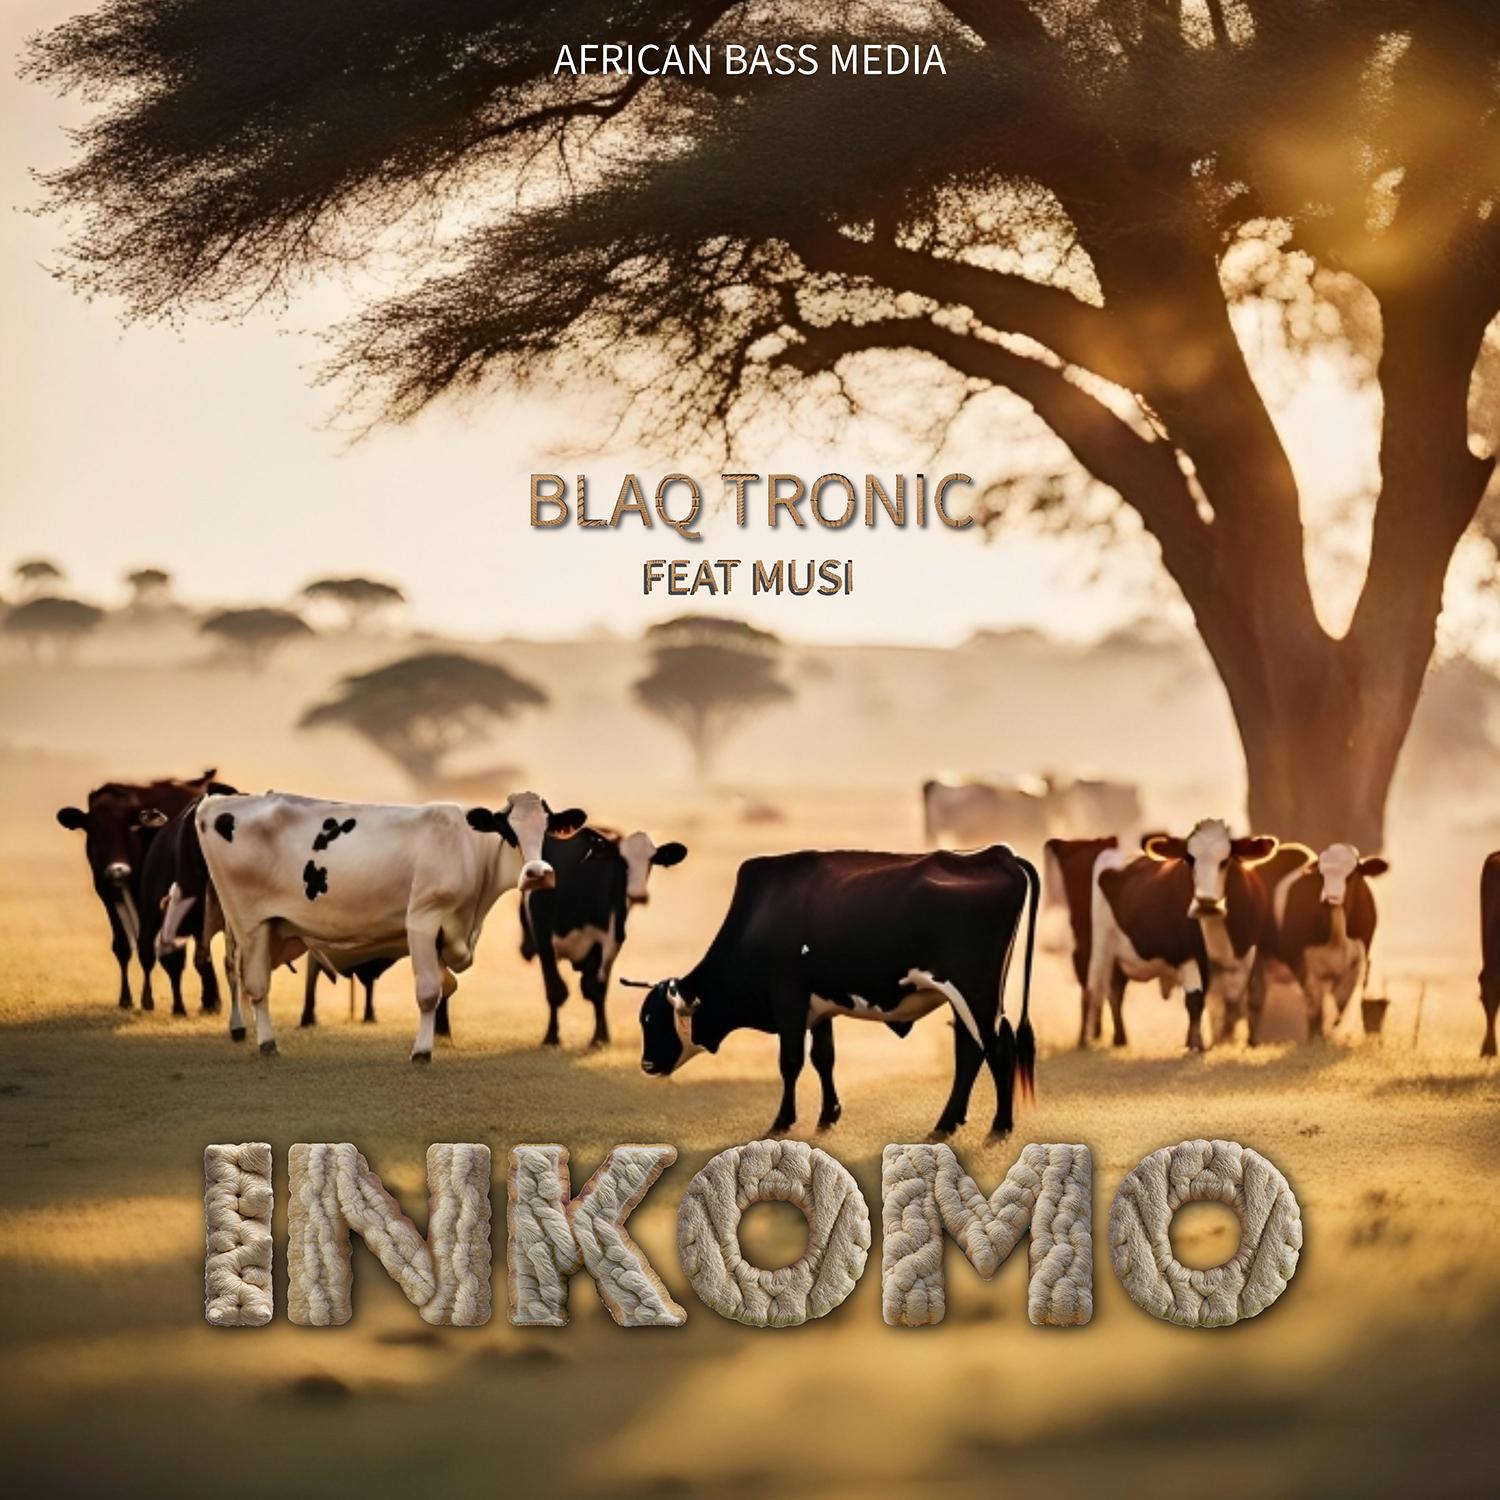 Постер альбома Inkomo